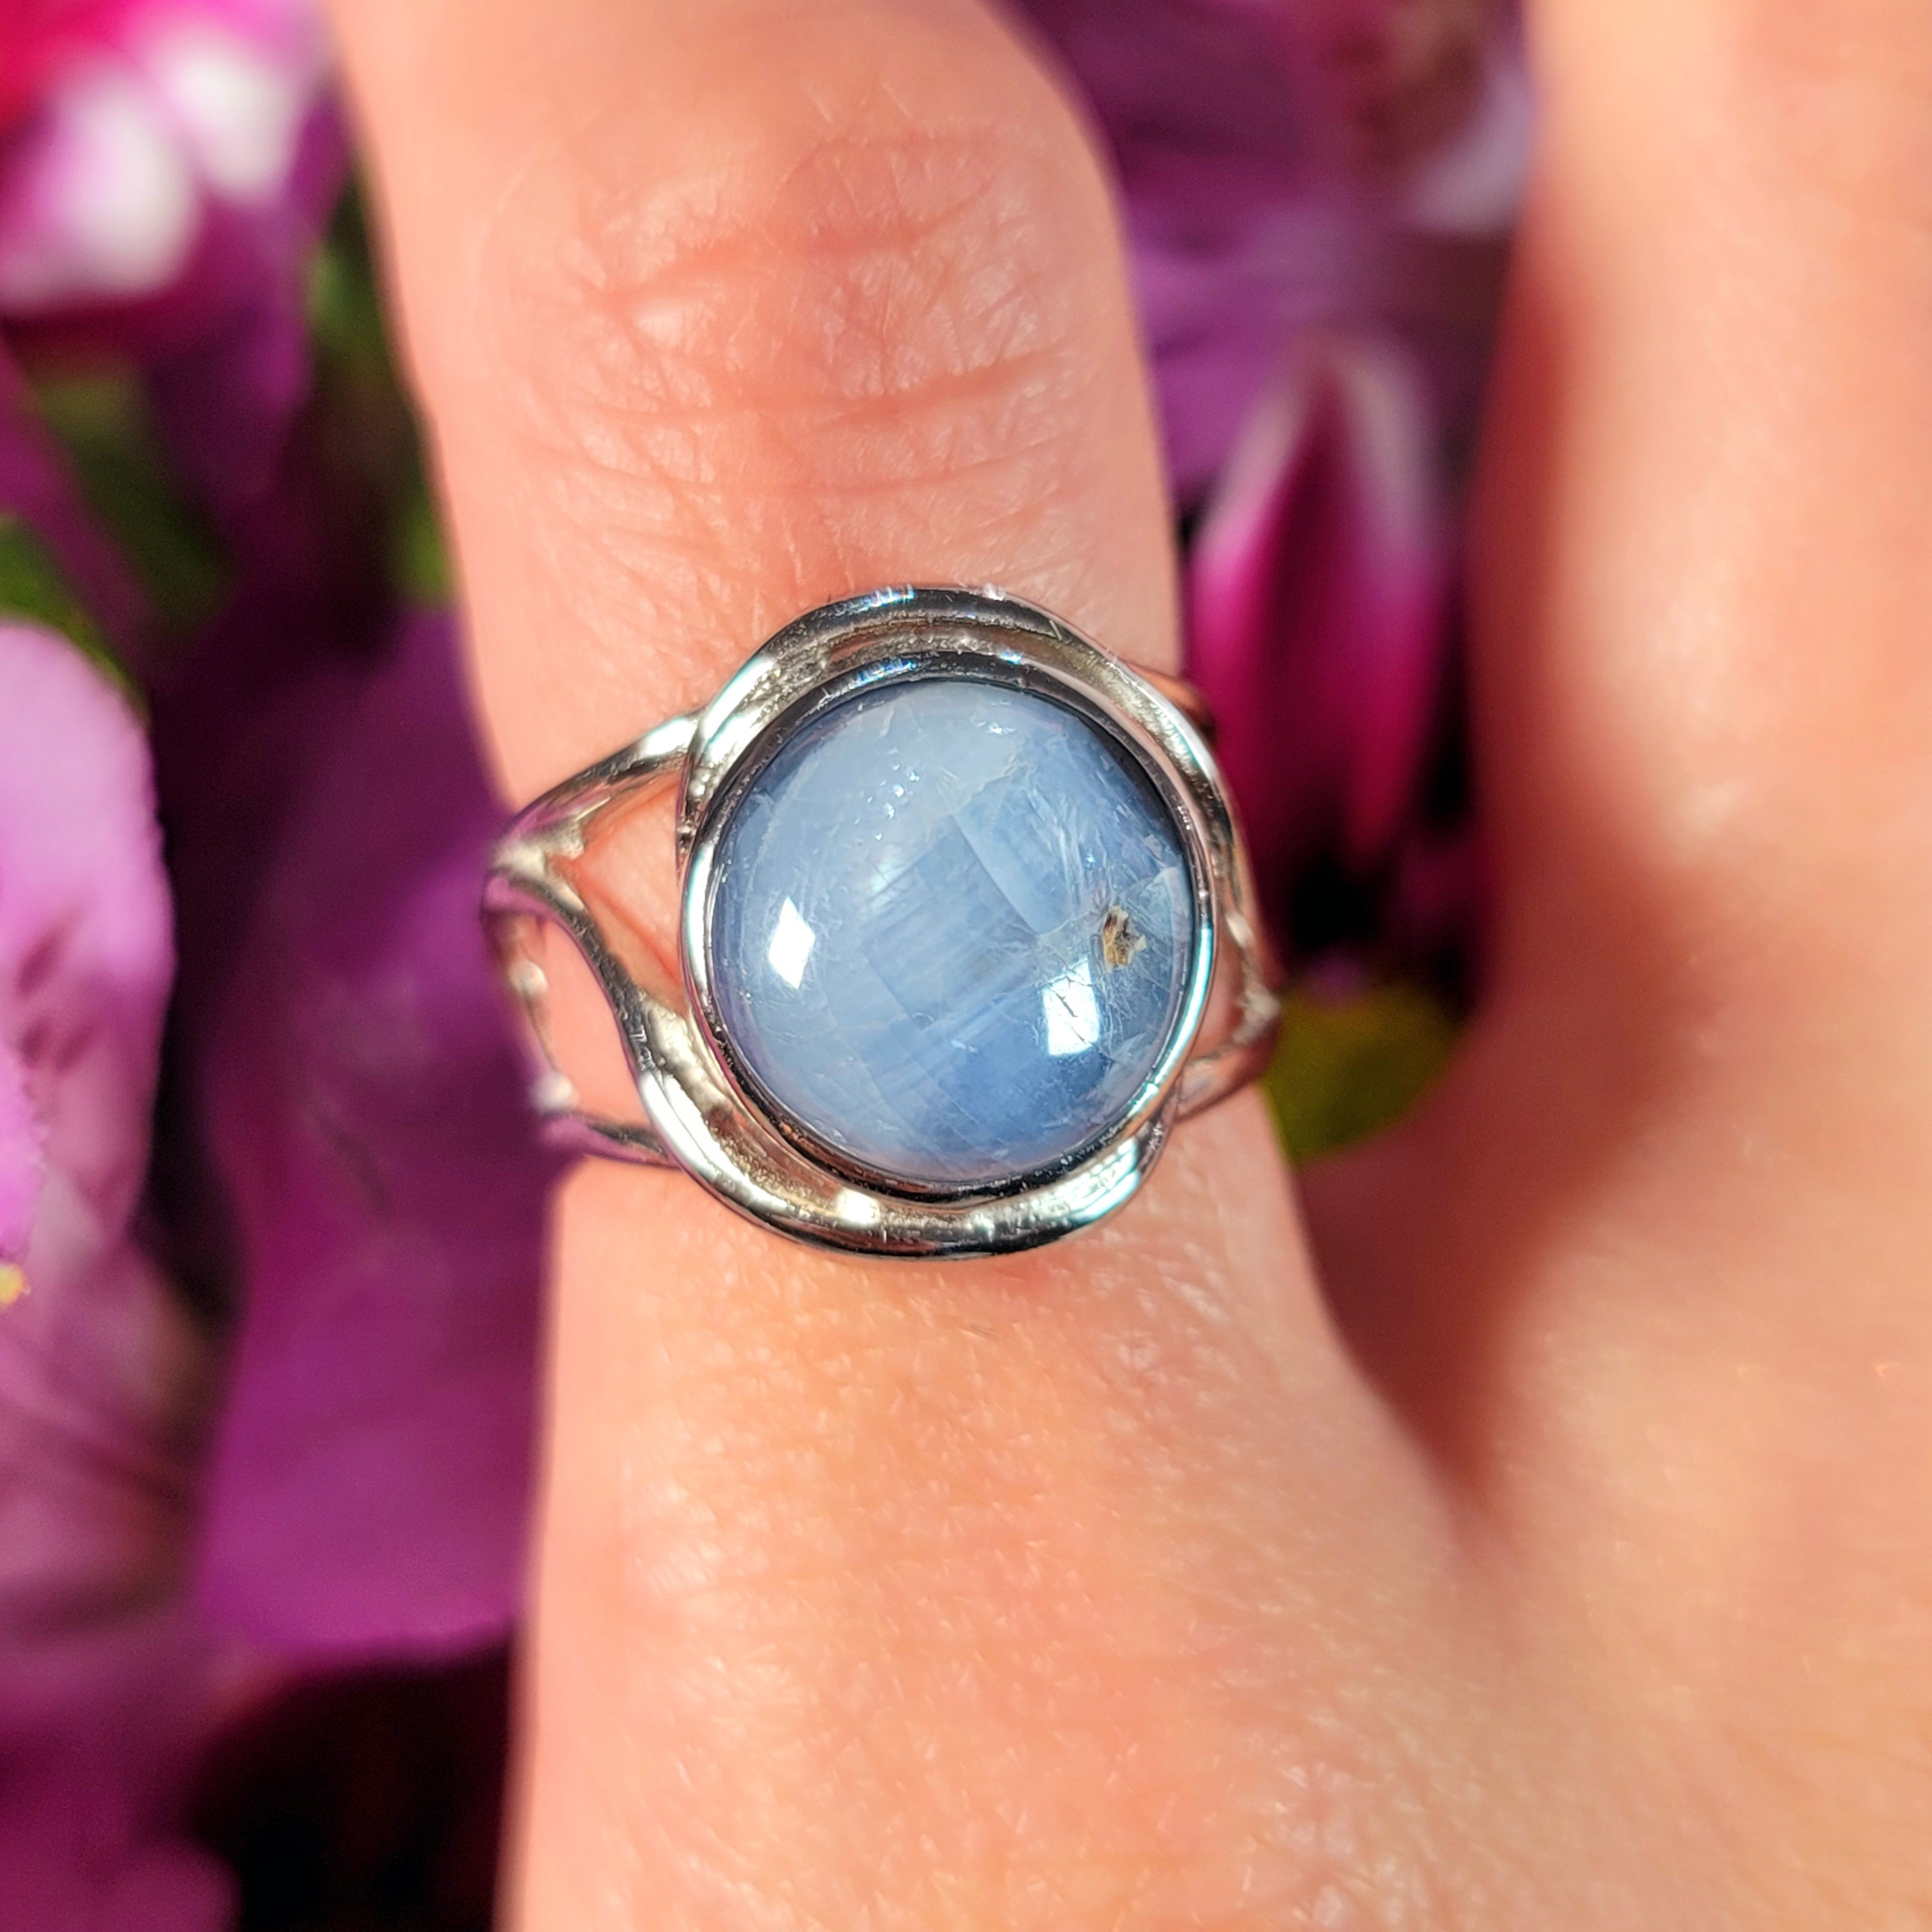 Star Blue Sapphire Adjustable Finger Bracelet .925 Silver for Focus, Discipline and Wisdom